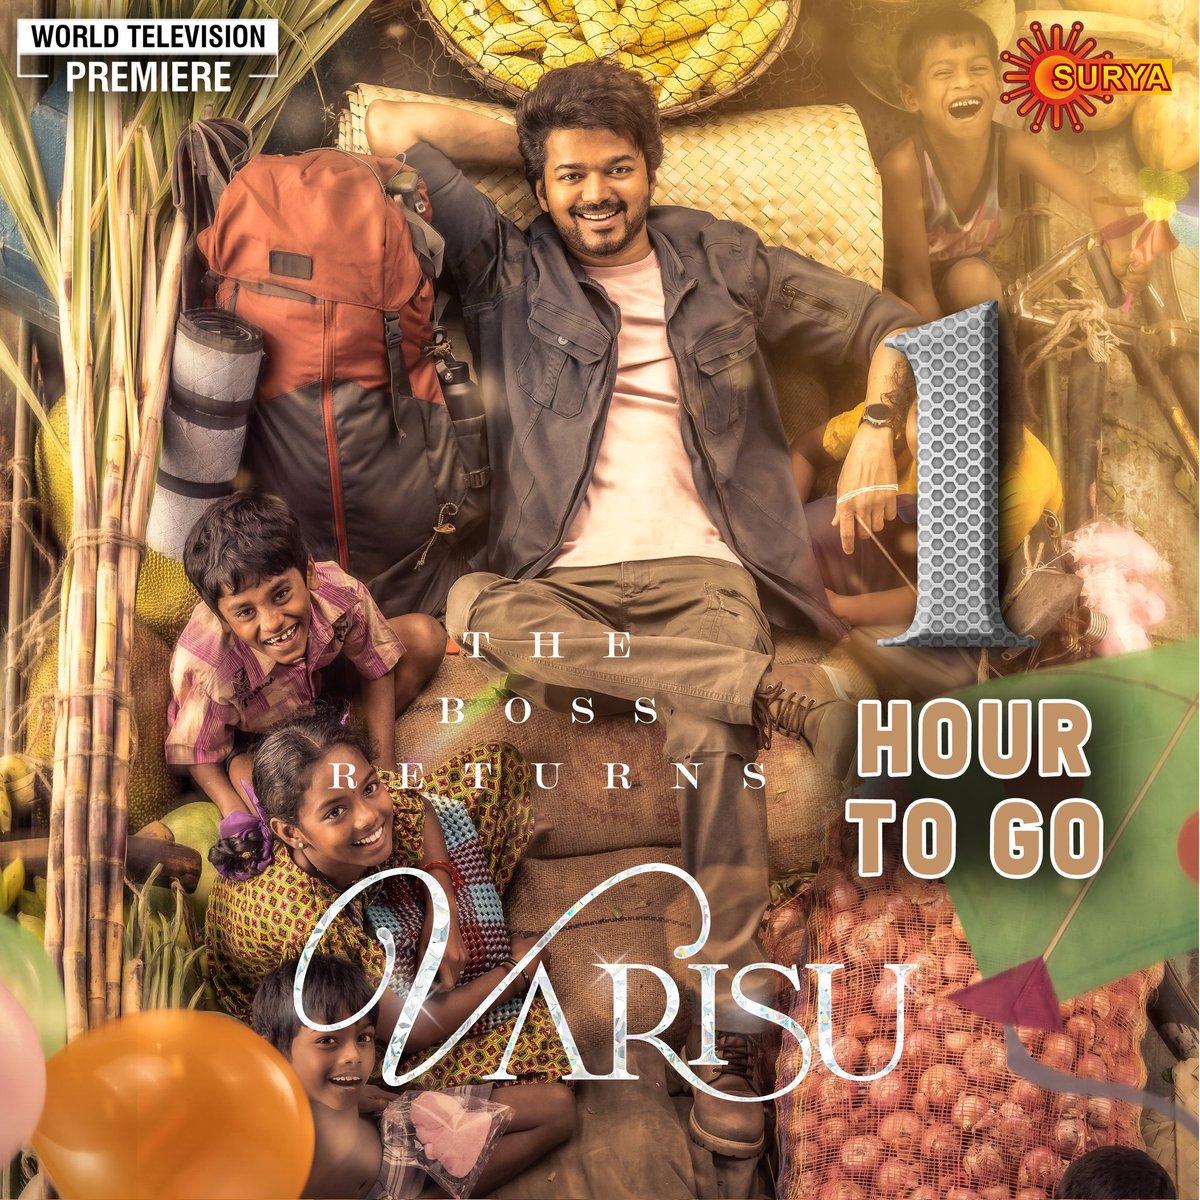 It’s almost showtime folks! Watch Vijay’s blockbuster “Varisu”, premiering today@ 6.30pm on Surya TV.

#SuryaTV #VarisuOnSuryaTV #Varisu #Vijay #RashmikaMandanna #ThalapathyVijay #MoviesOnSuryaTV